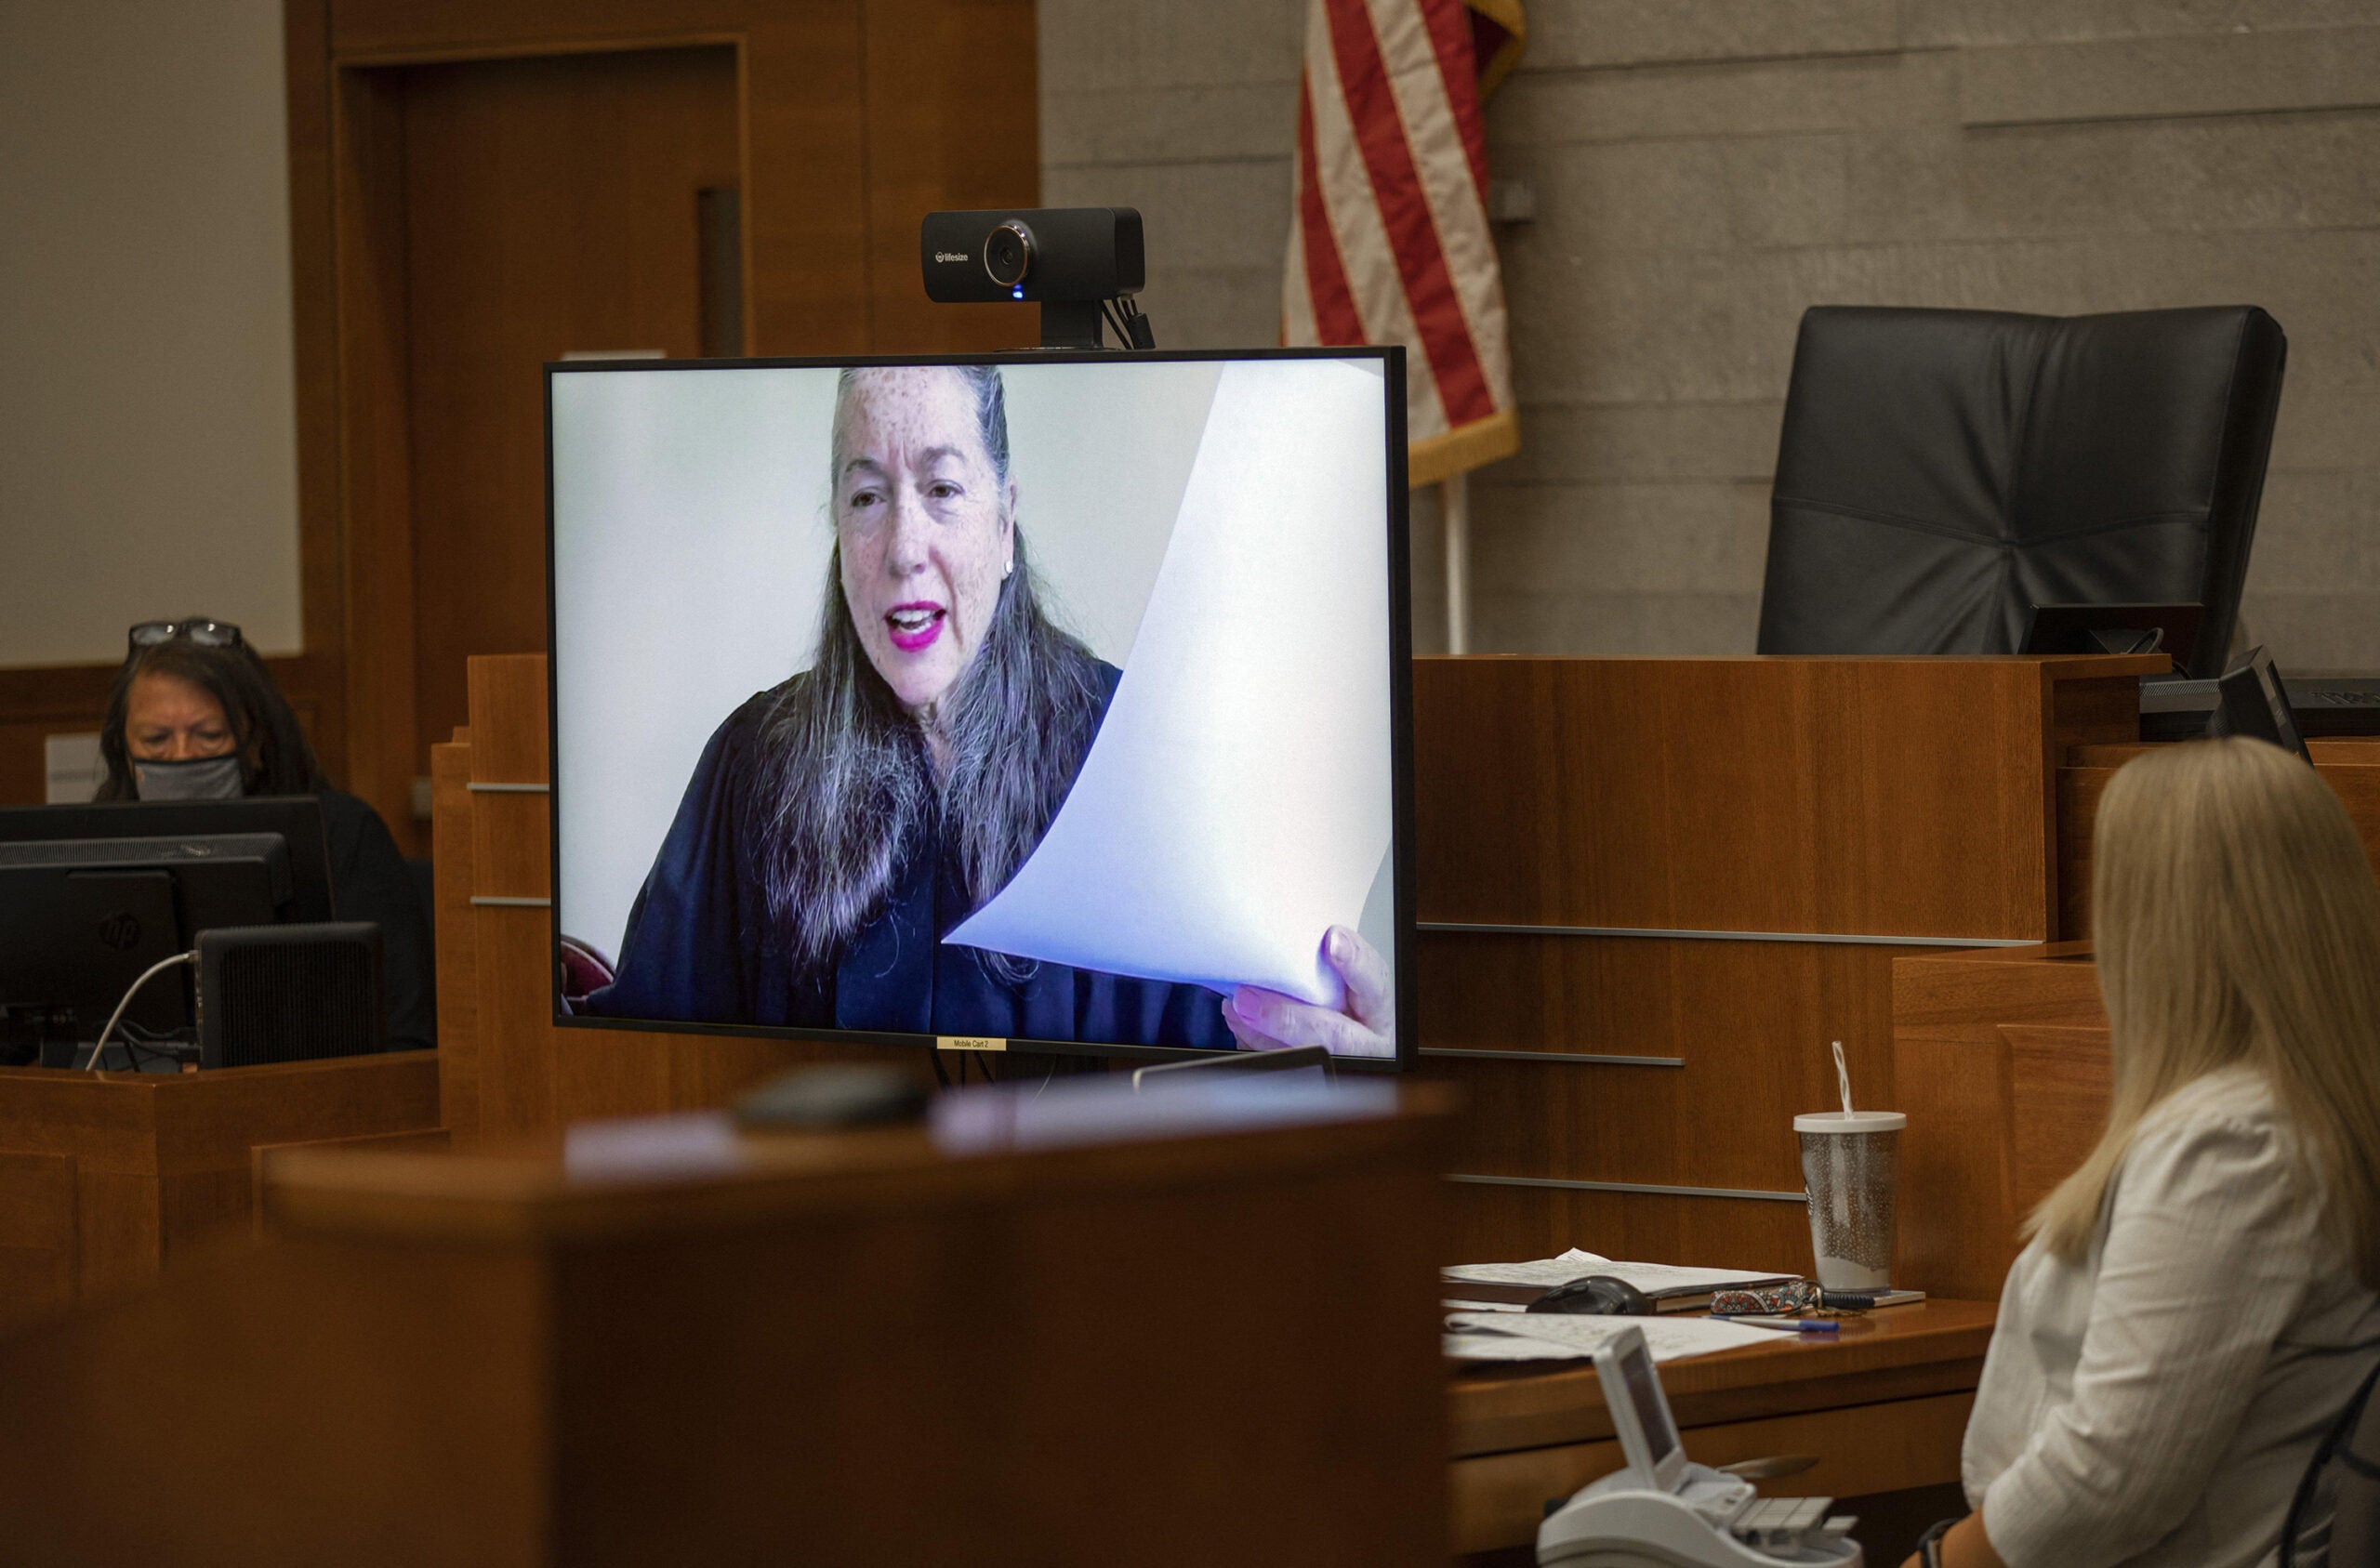 Judge Julie M. Lynch presides over a courtroom remotely